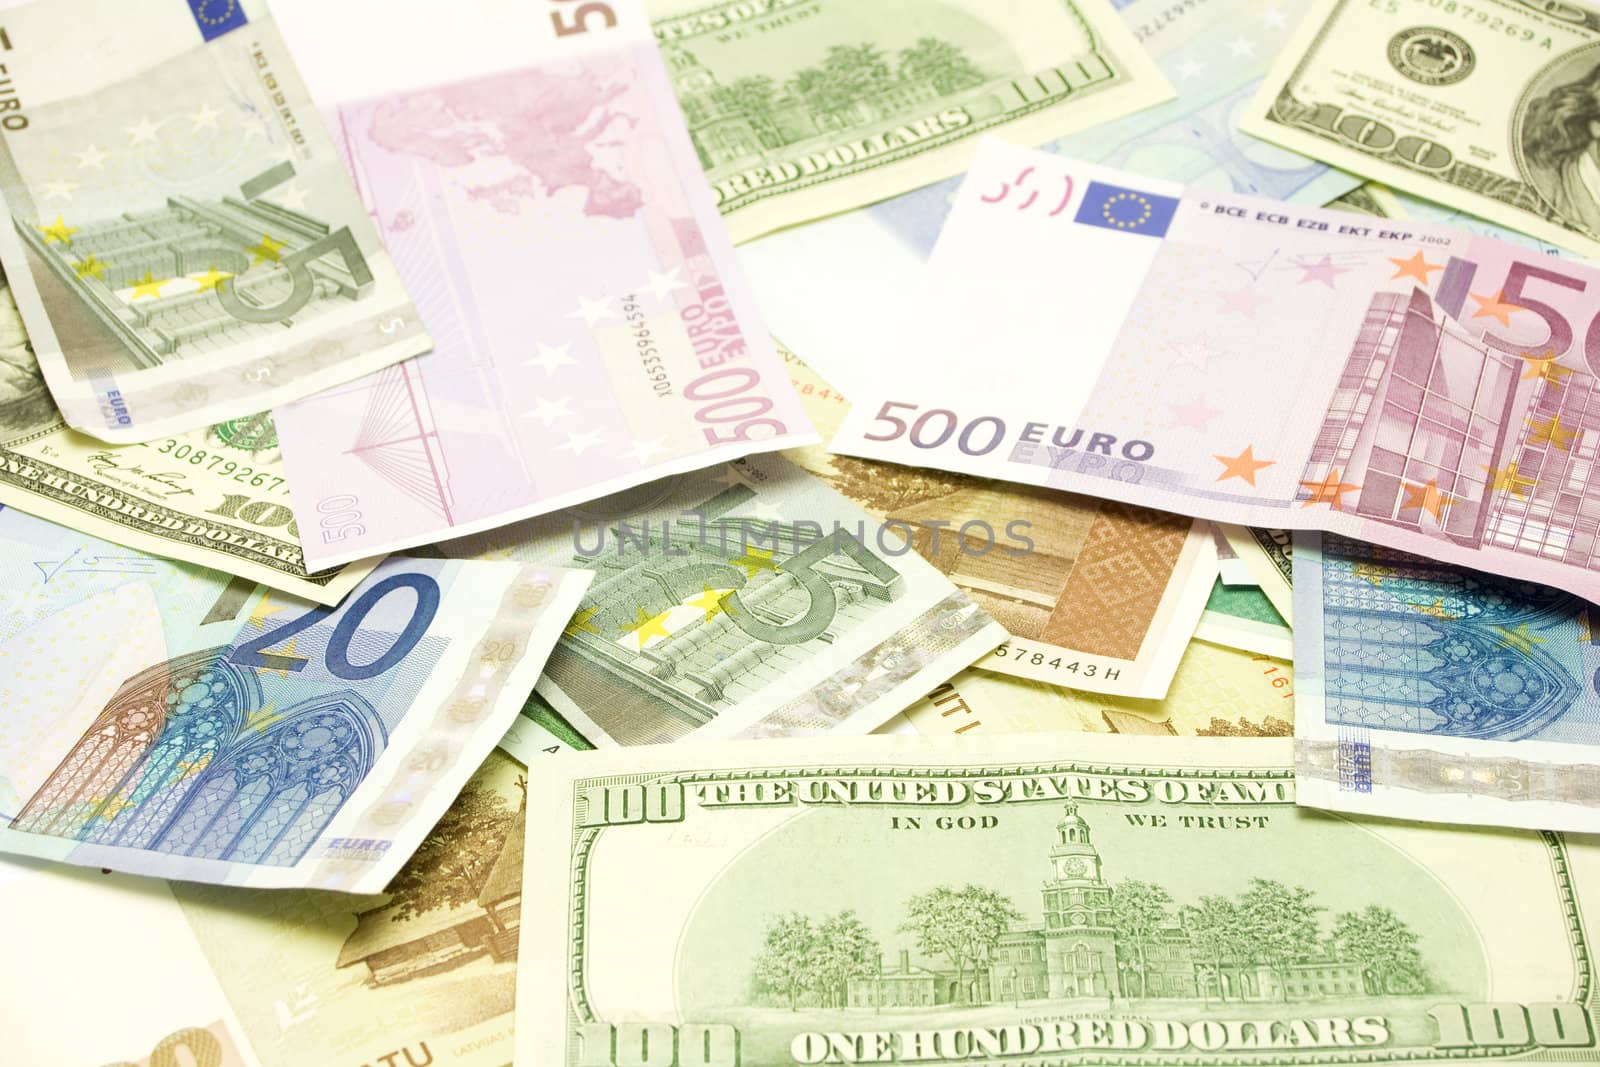 Dollar, euro, lat banknotes by ursolv